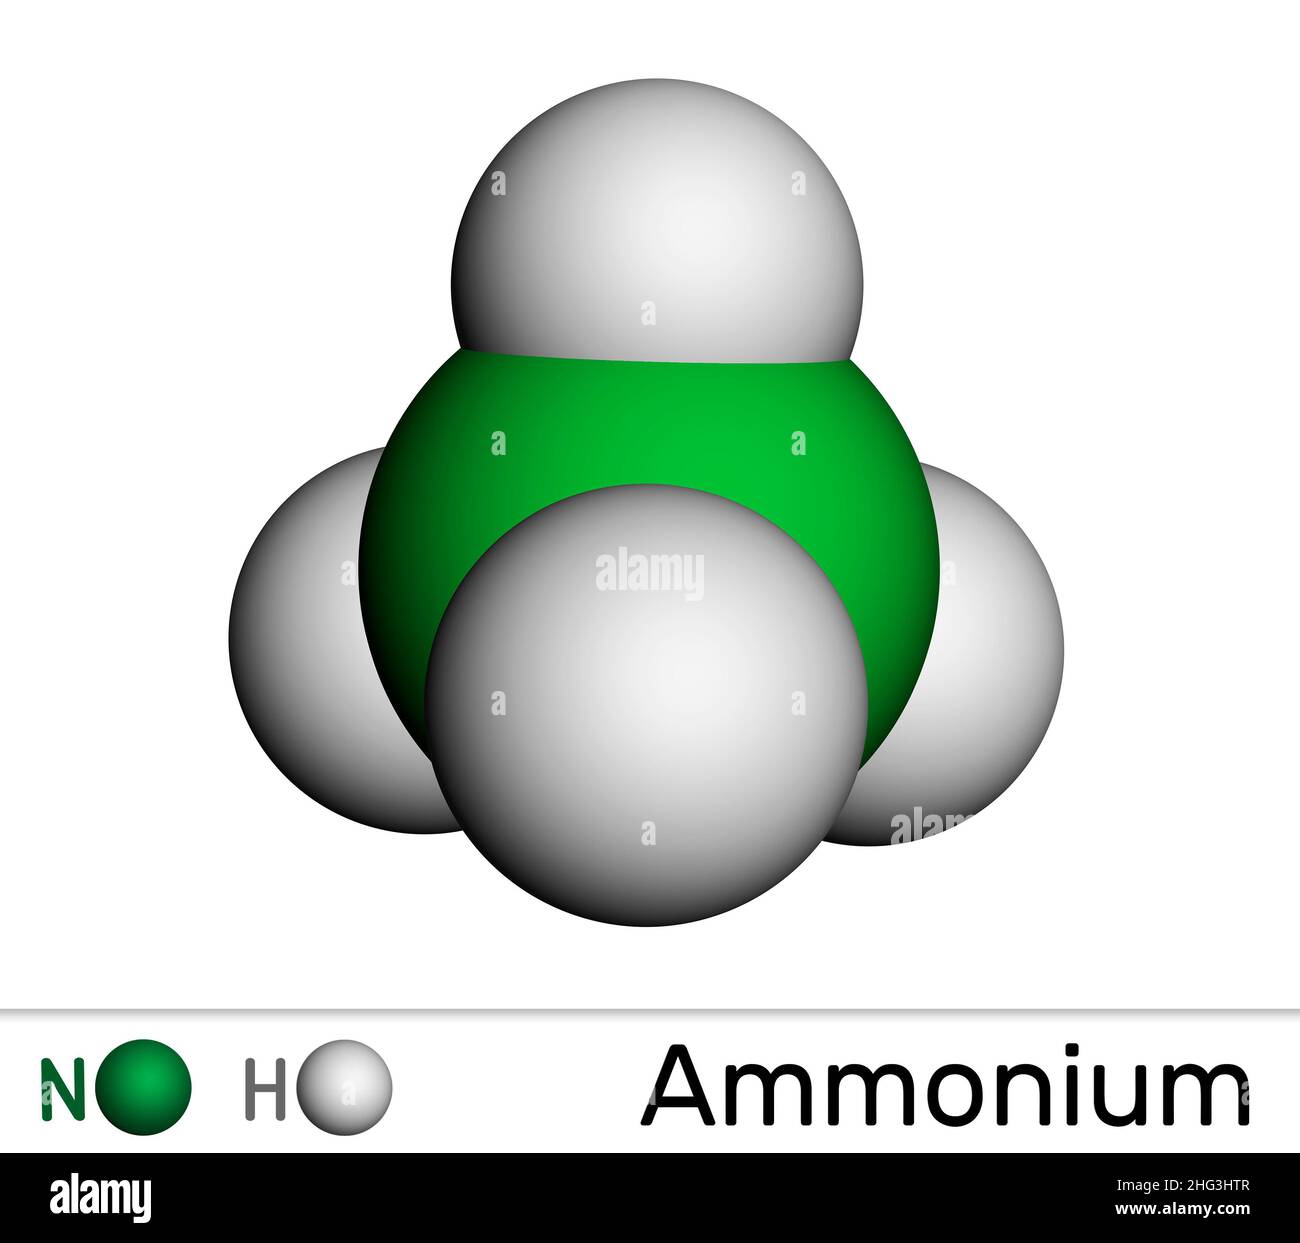 578 Ammonium Chloride Images, Stock Photos, 3D objects, & Vectors